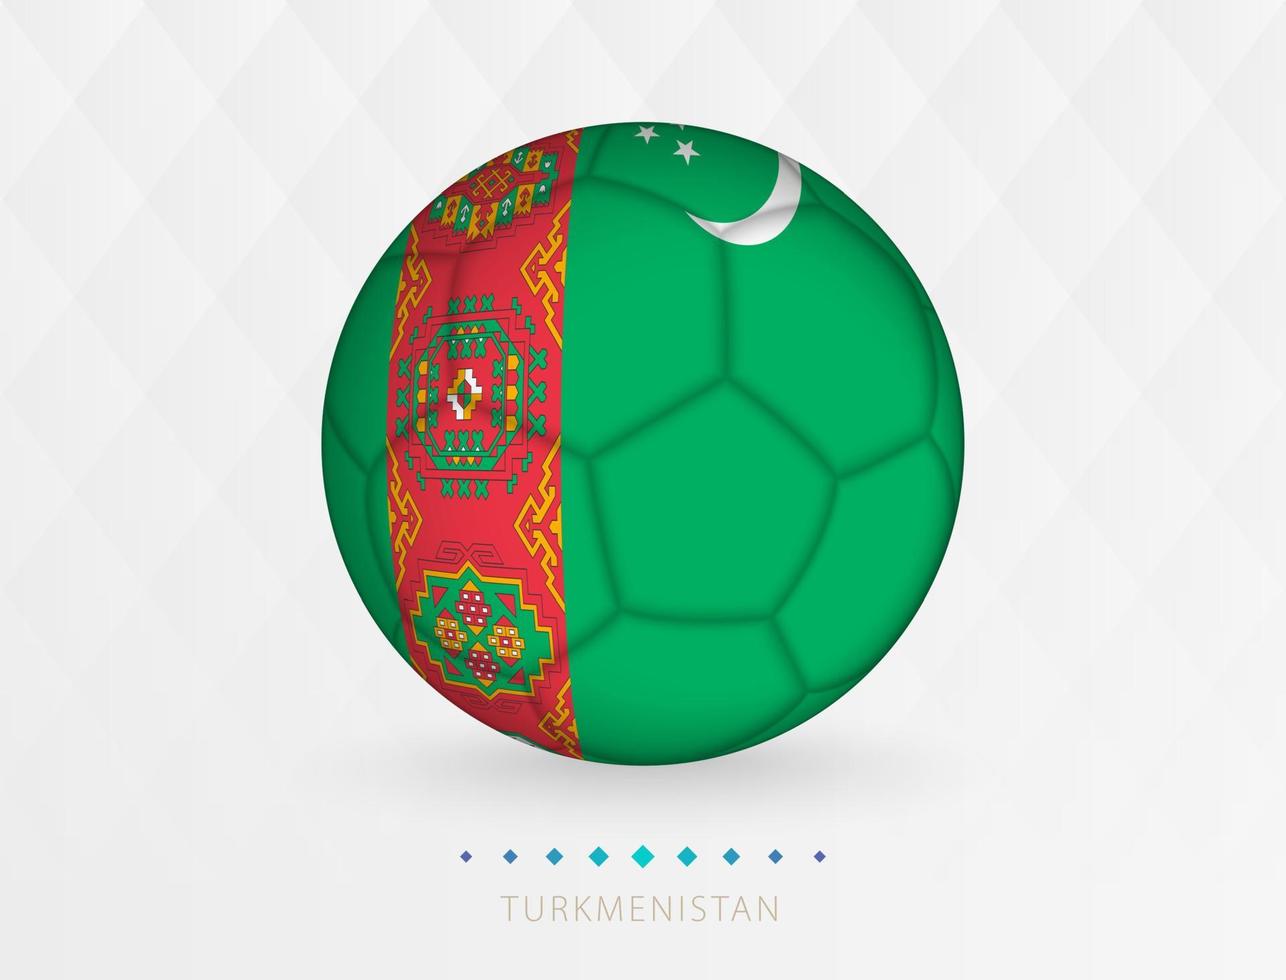 Football ball with Turkmenistan flag pattern, soccer ball with flag of Turkmenistan national team. vector